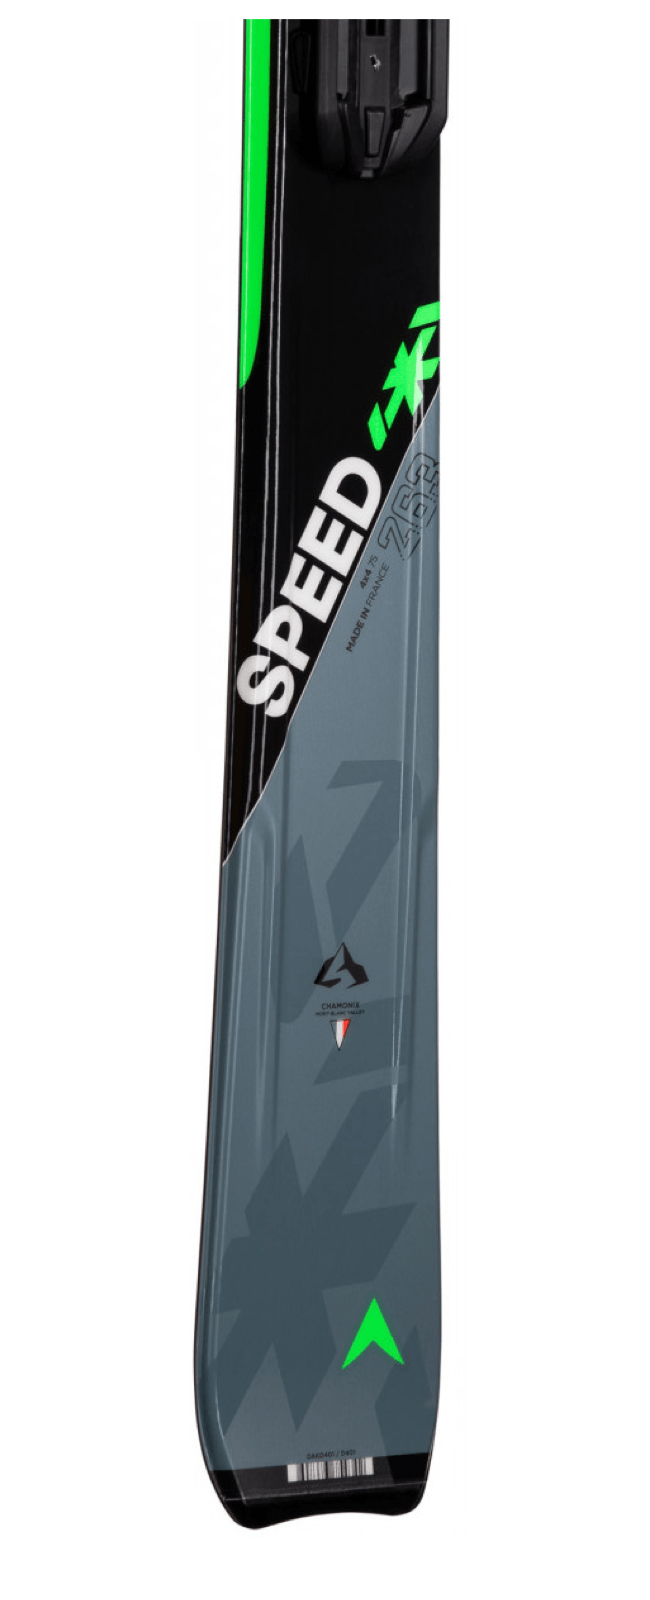 Dynastar Speed 4X4 263 Skis + 10 GW Ski Bindings · 2023 | Curated.com